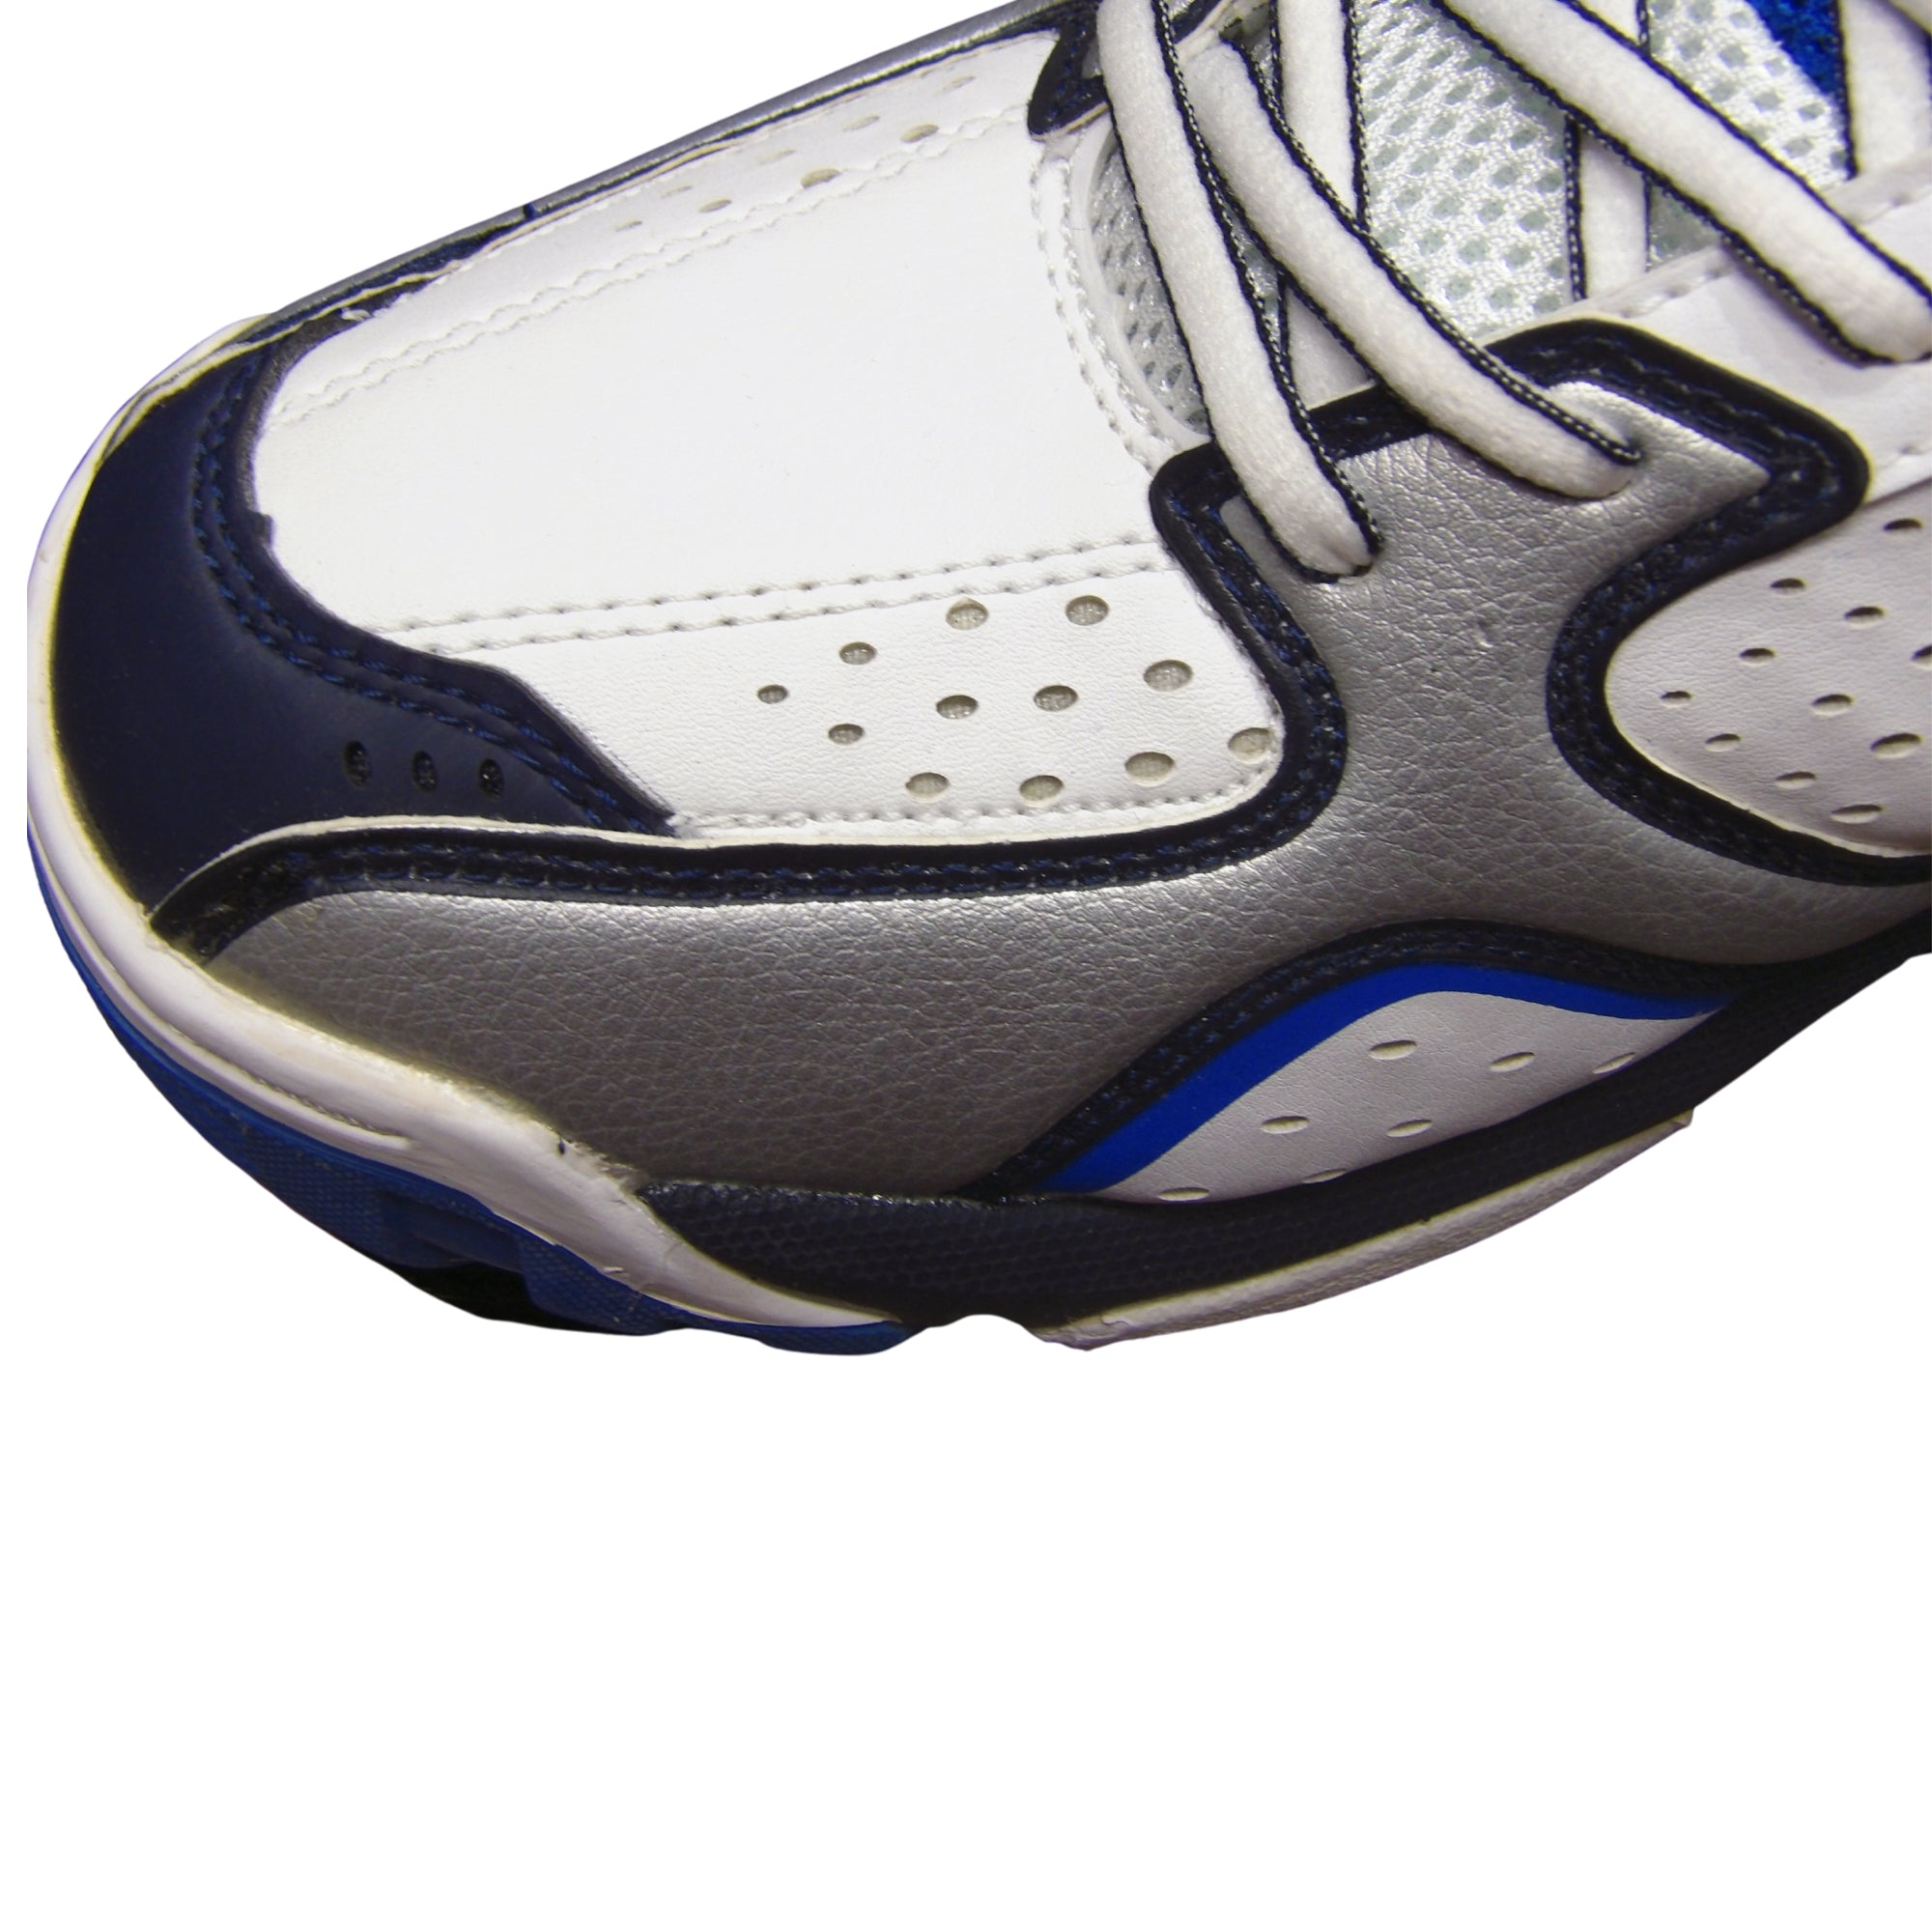 SG Cricket Shoes, Model Striker II - White/Silver/Blue